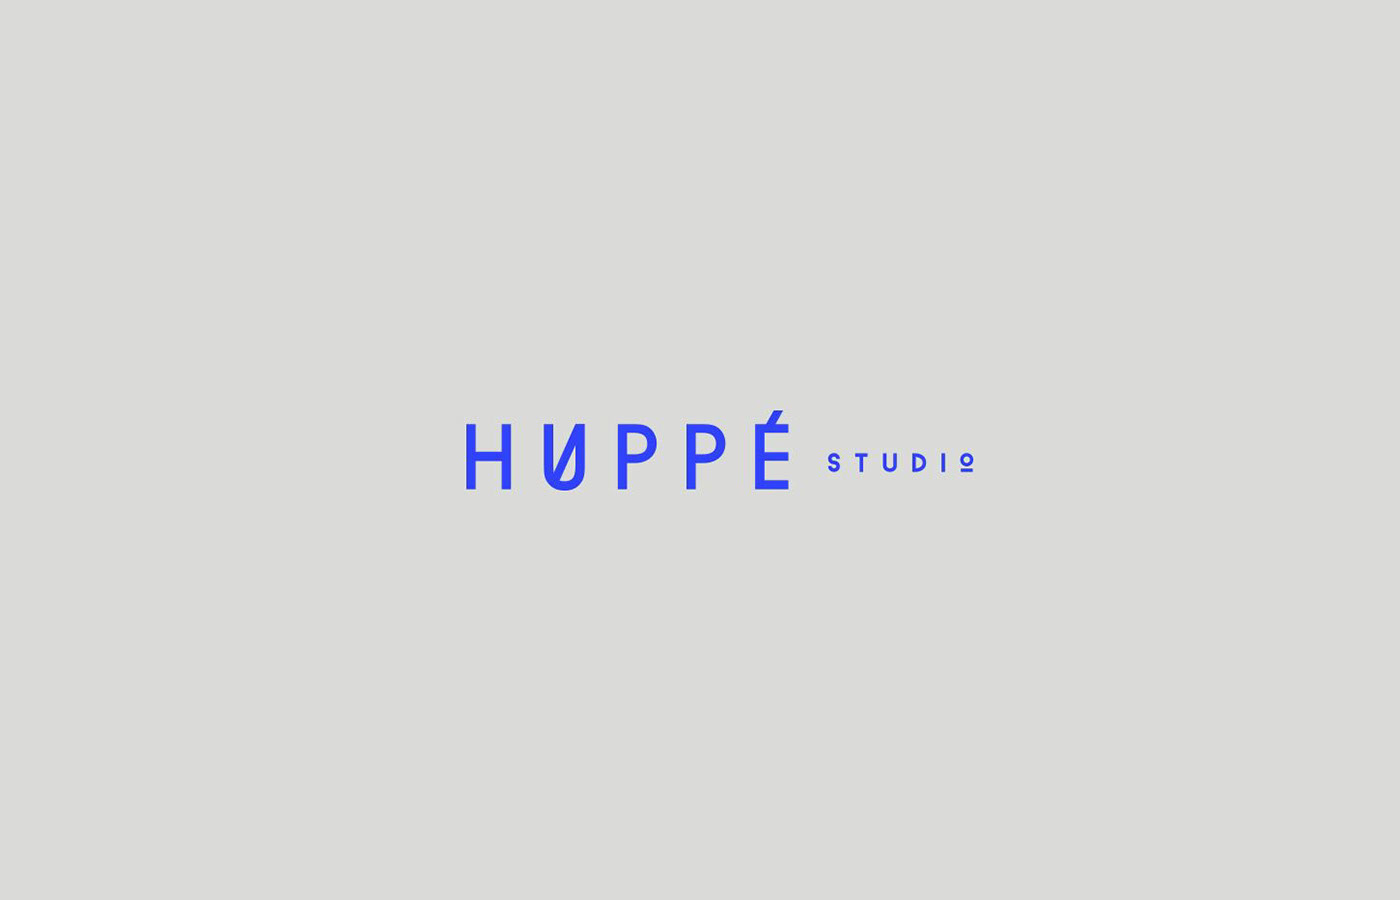 huppé studio photos Montreal Web design blue fullscreen Stationery papeterie Awards stroke clean interactive